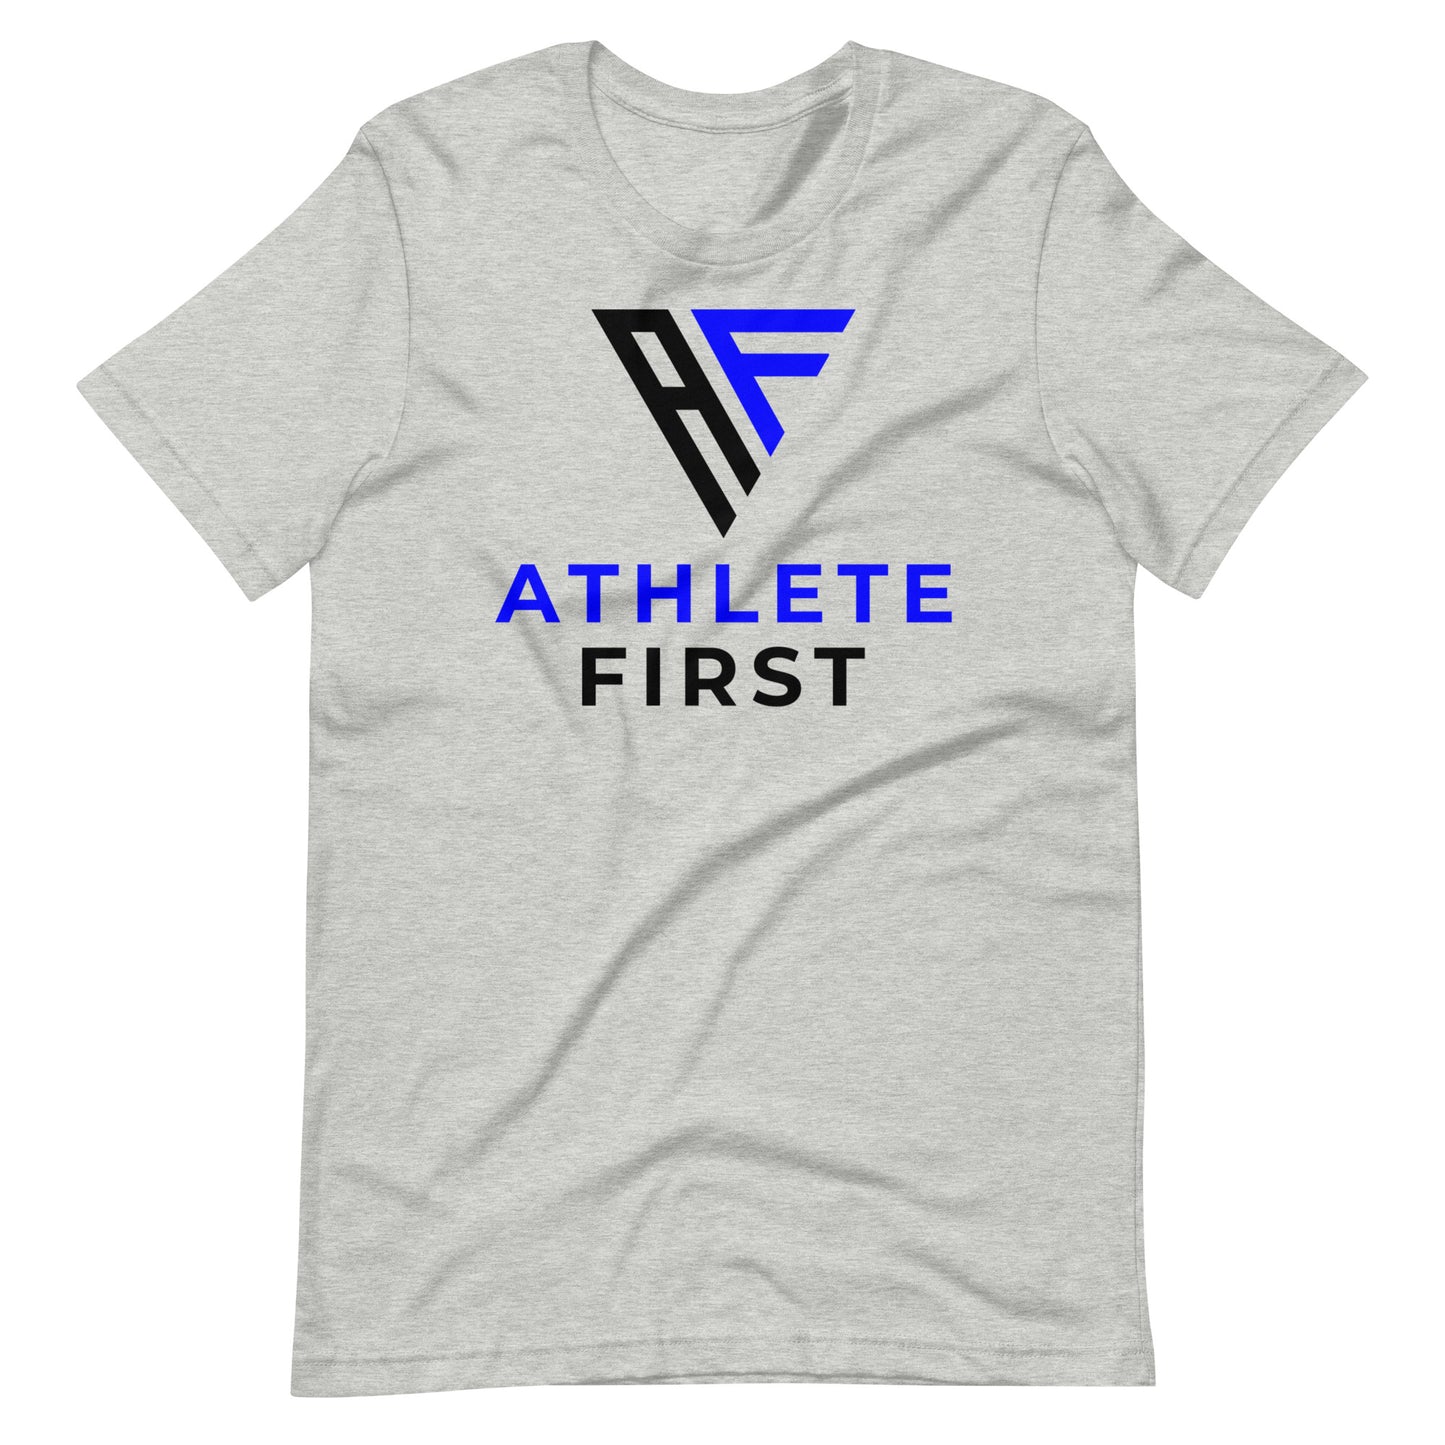 Athlete First: Black and Blue Emblem Tee